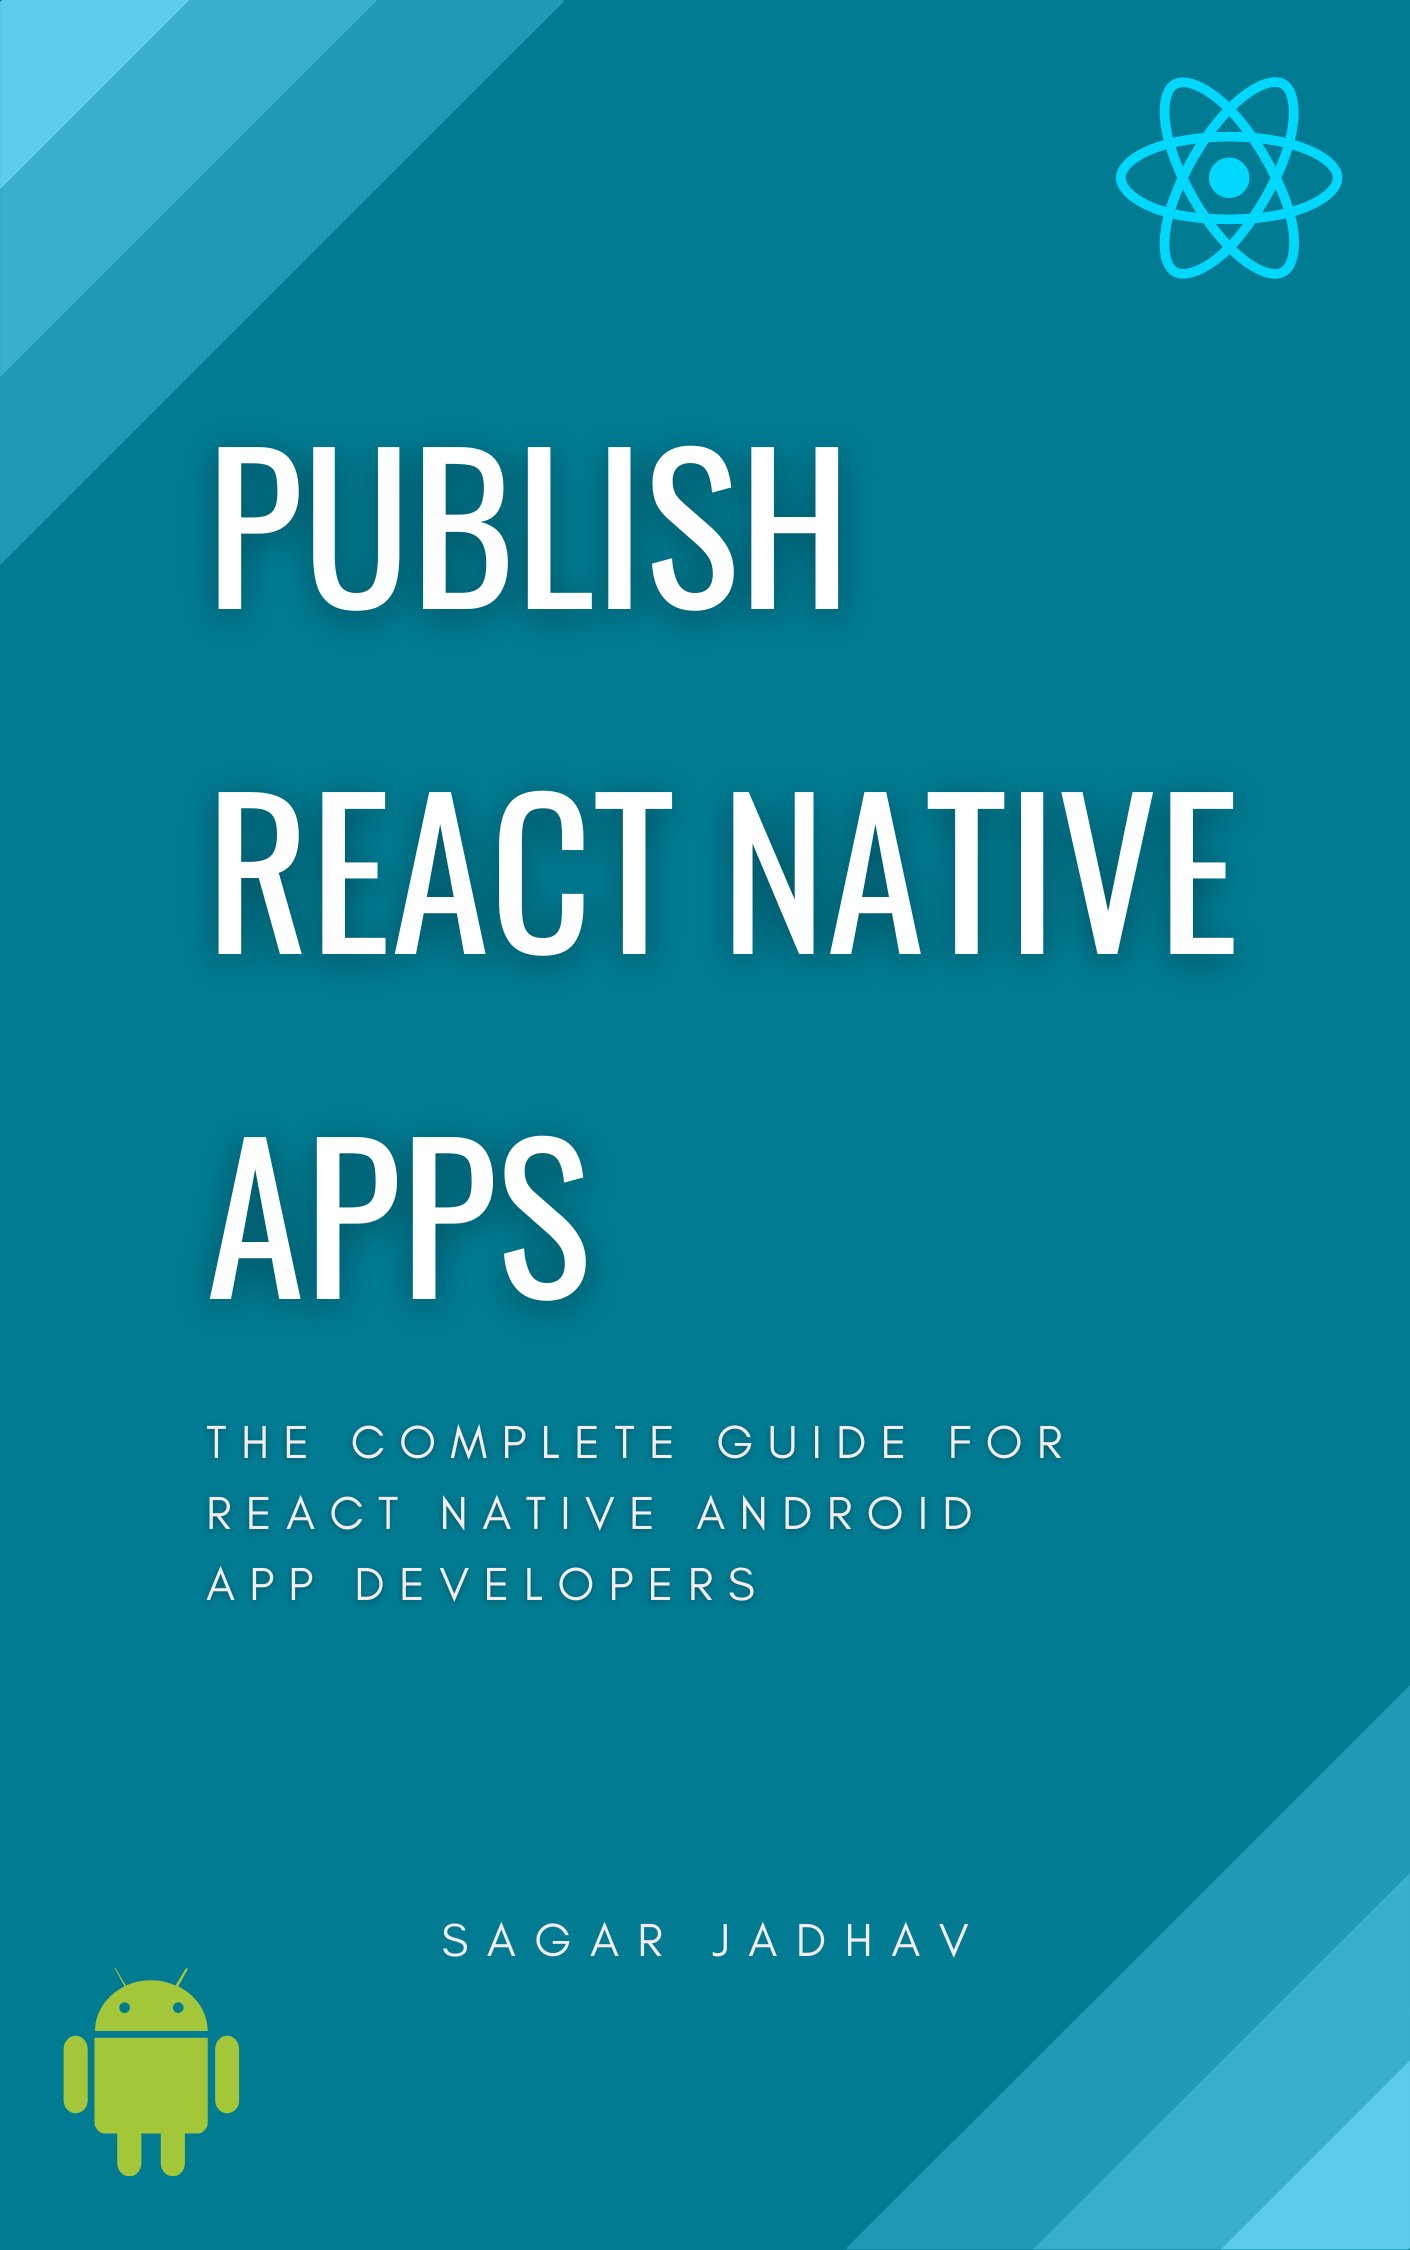 FREE: Publish React Native Apps by Sagar Jadhav